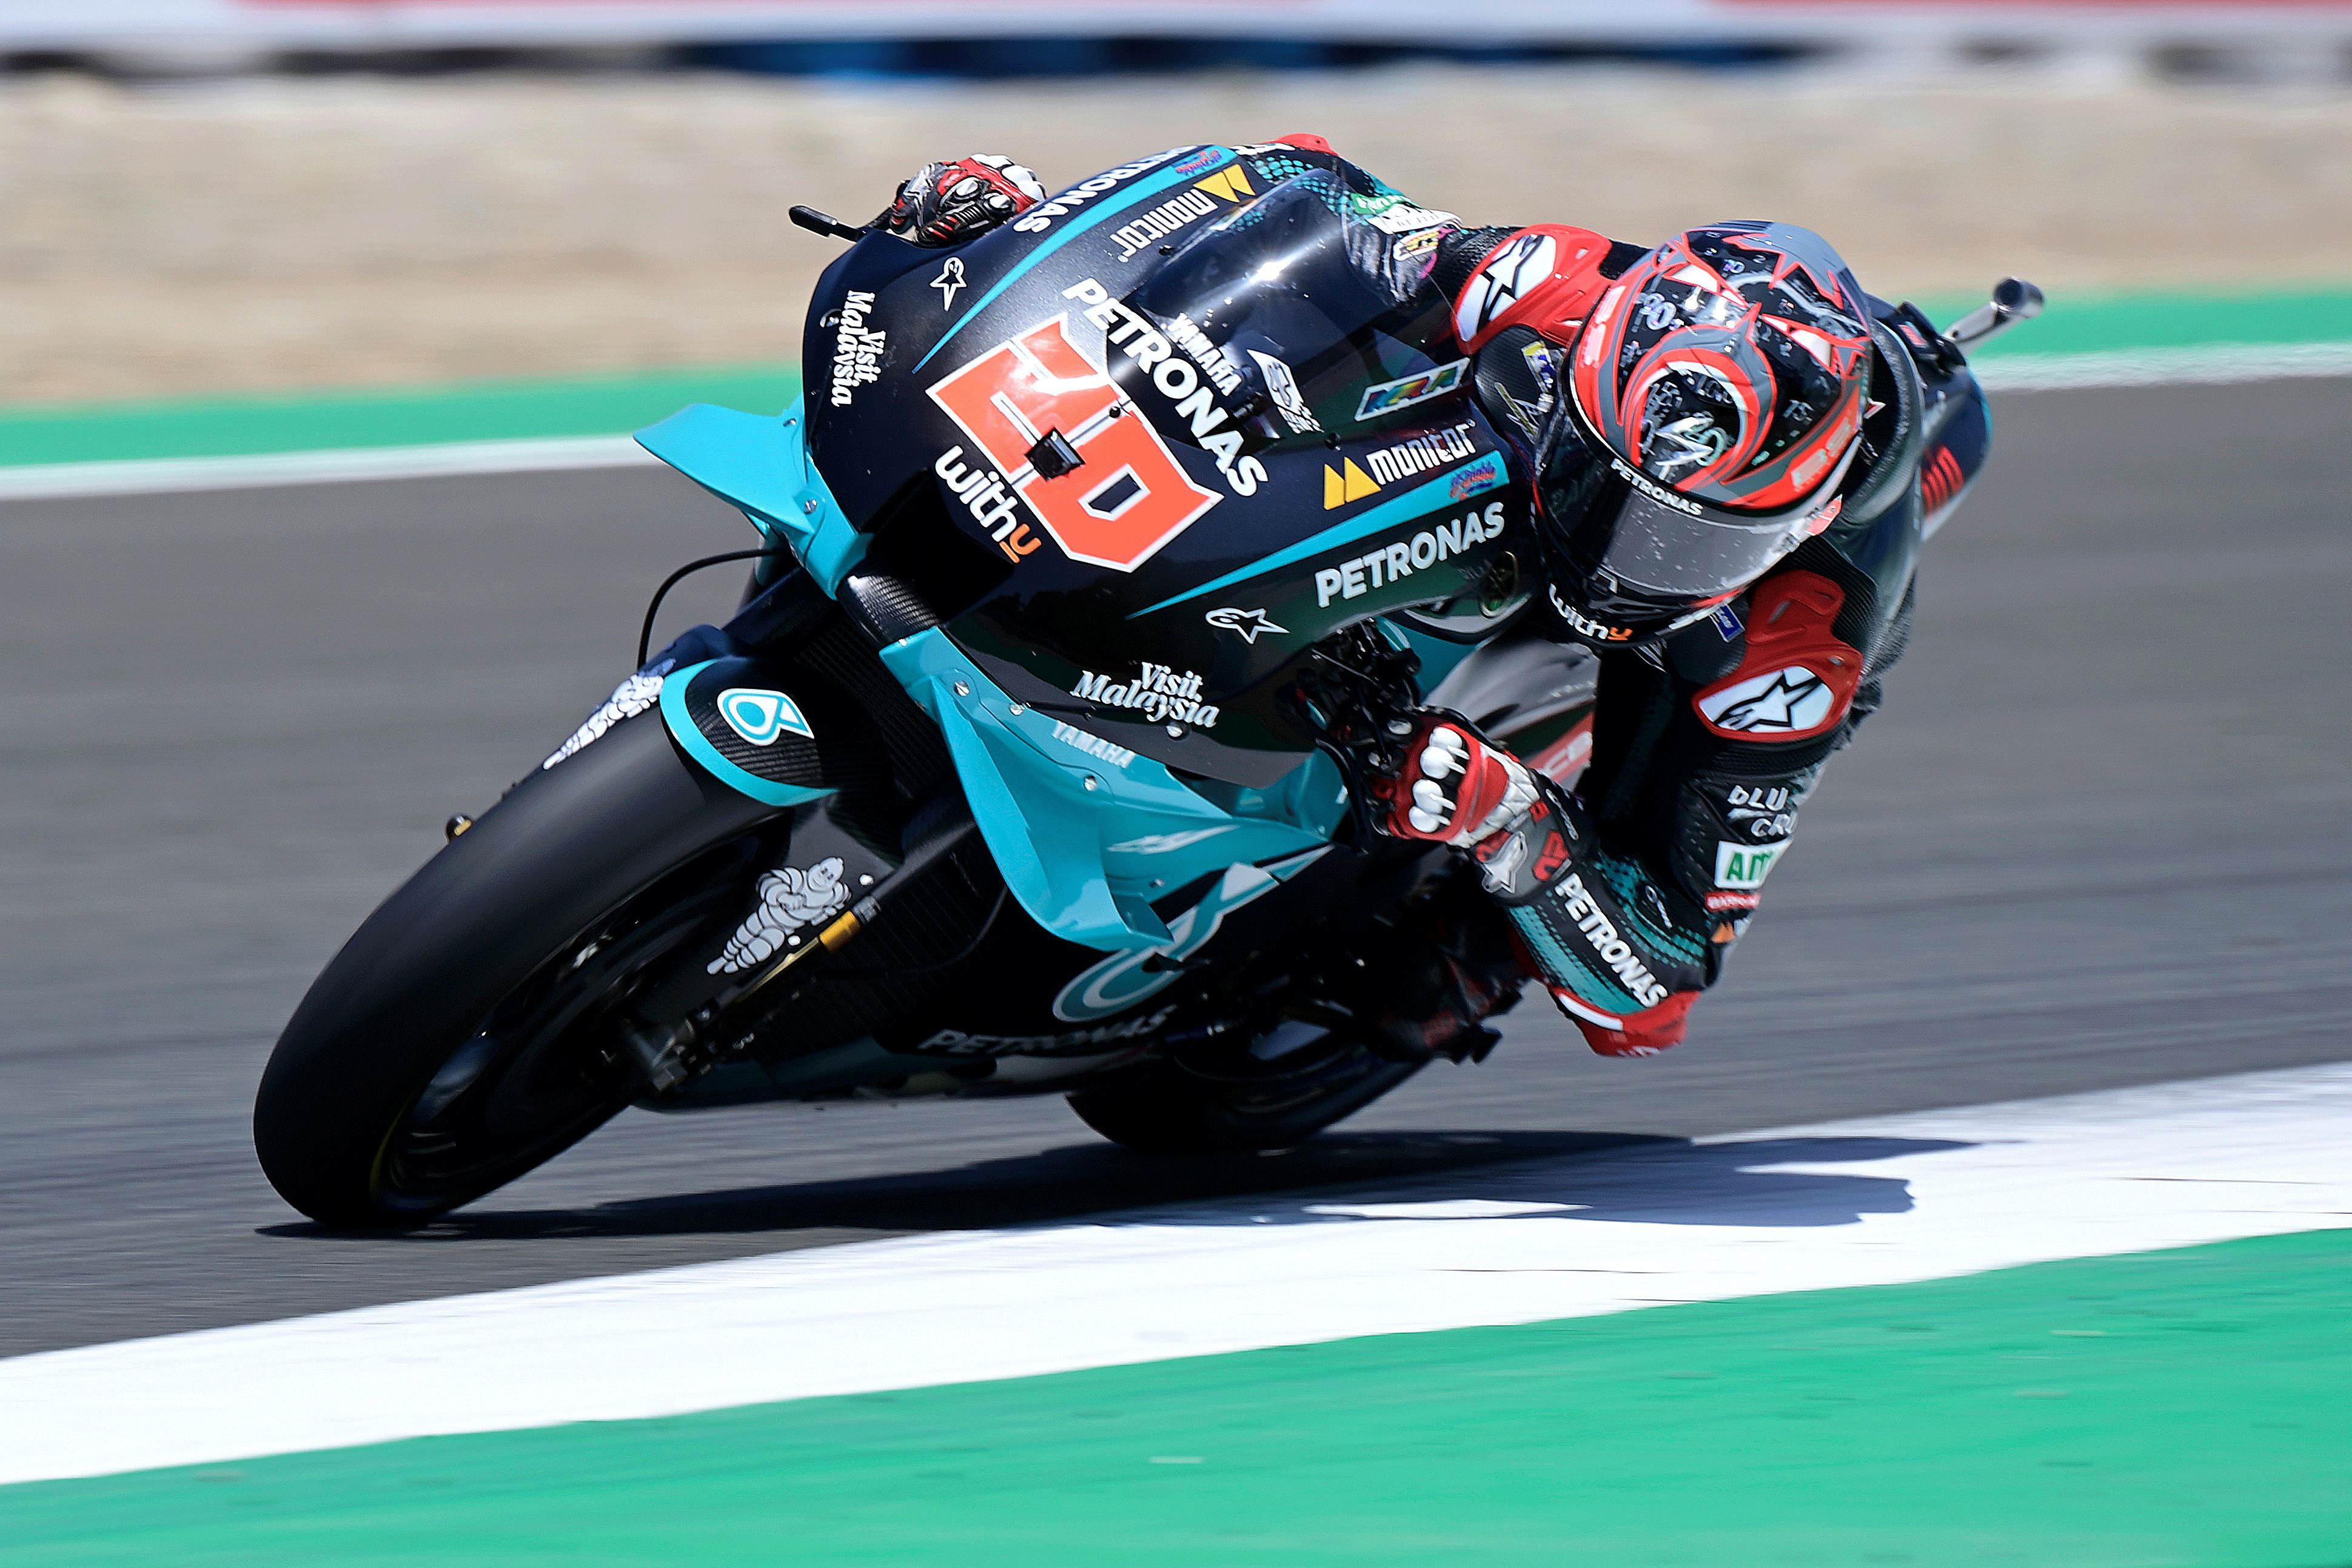 Fabio Quartararo in 2nd Win at Andalucia, MotoGP on Yamaha